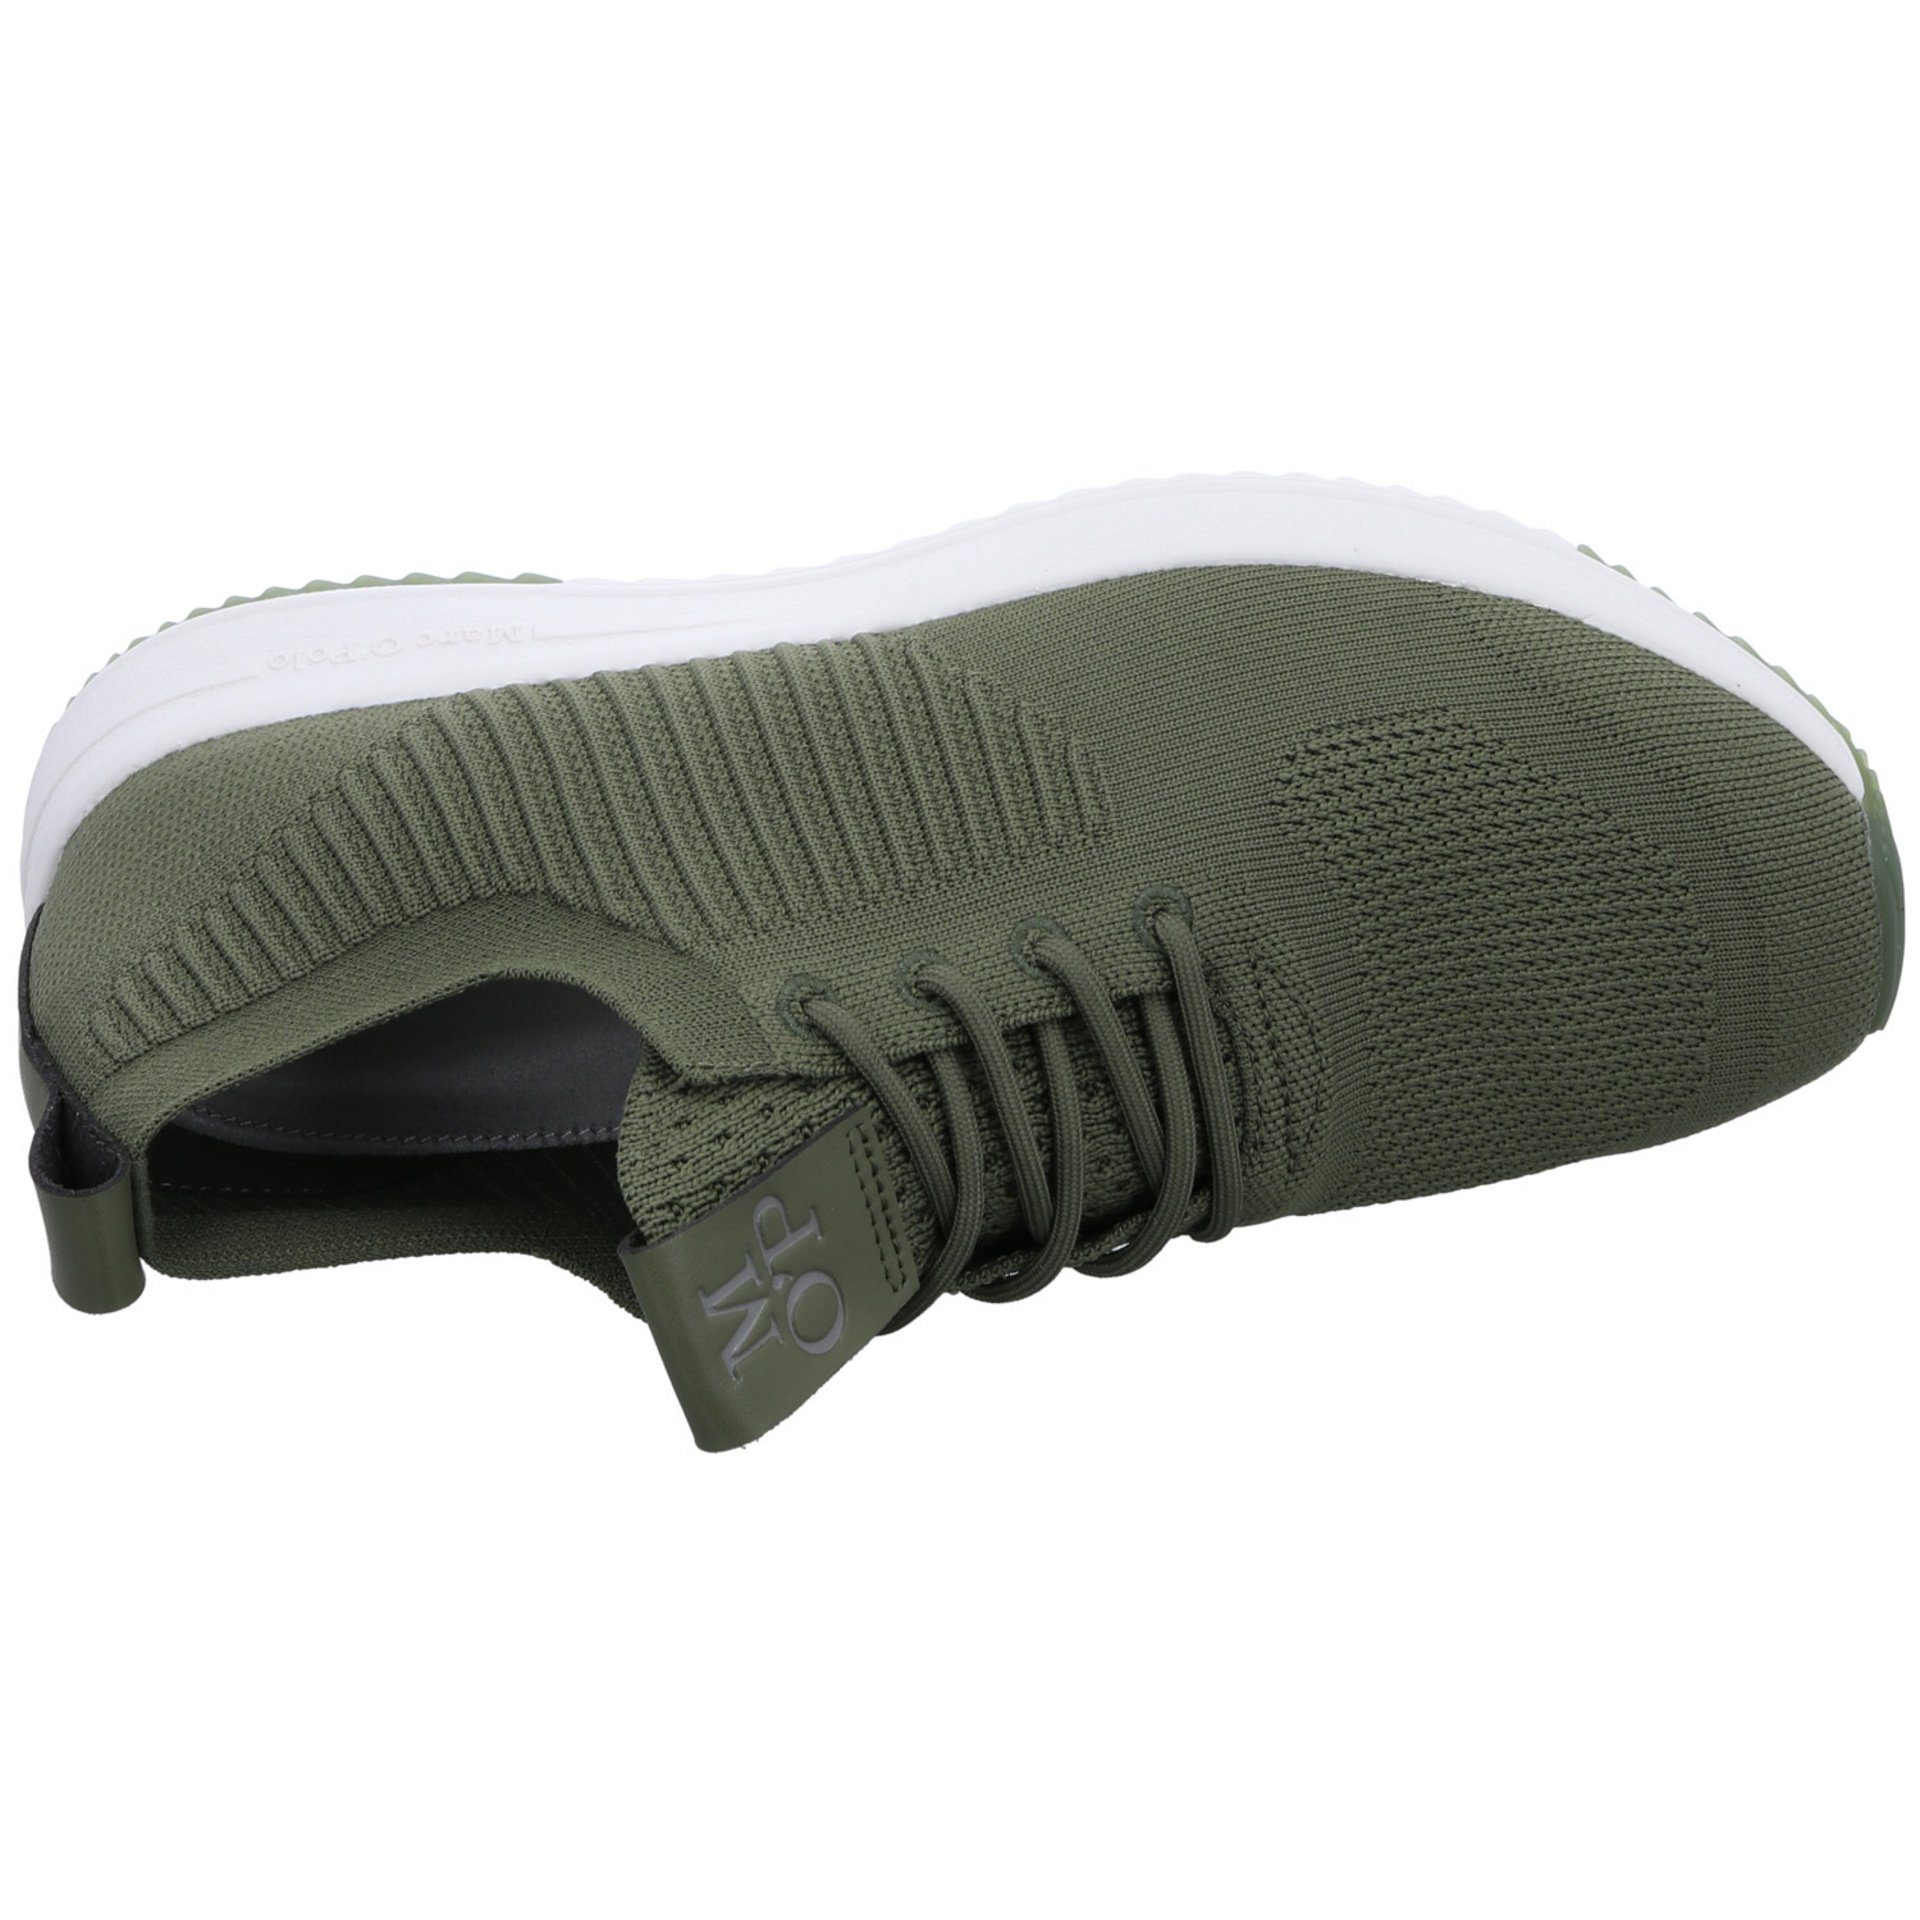 Slipper Schuhe Sneaker O'Polo Herren dunkel grün+petrol Textil Schnürschuh Jasper Marc